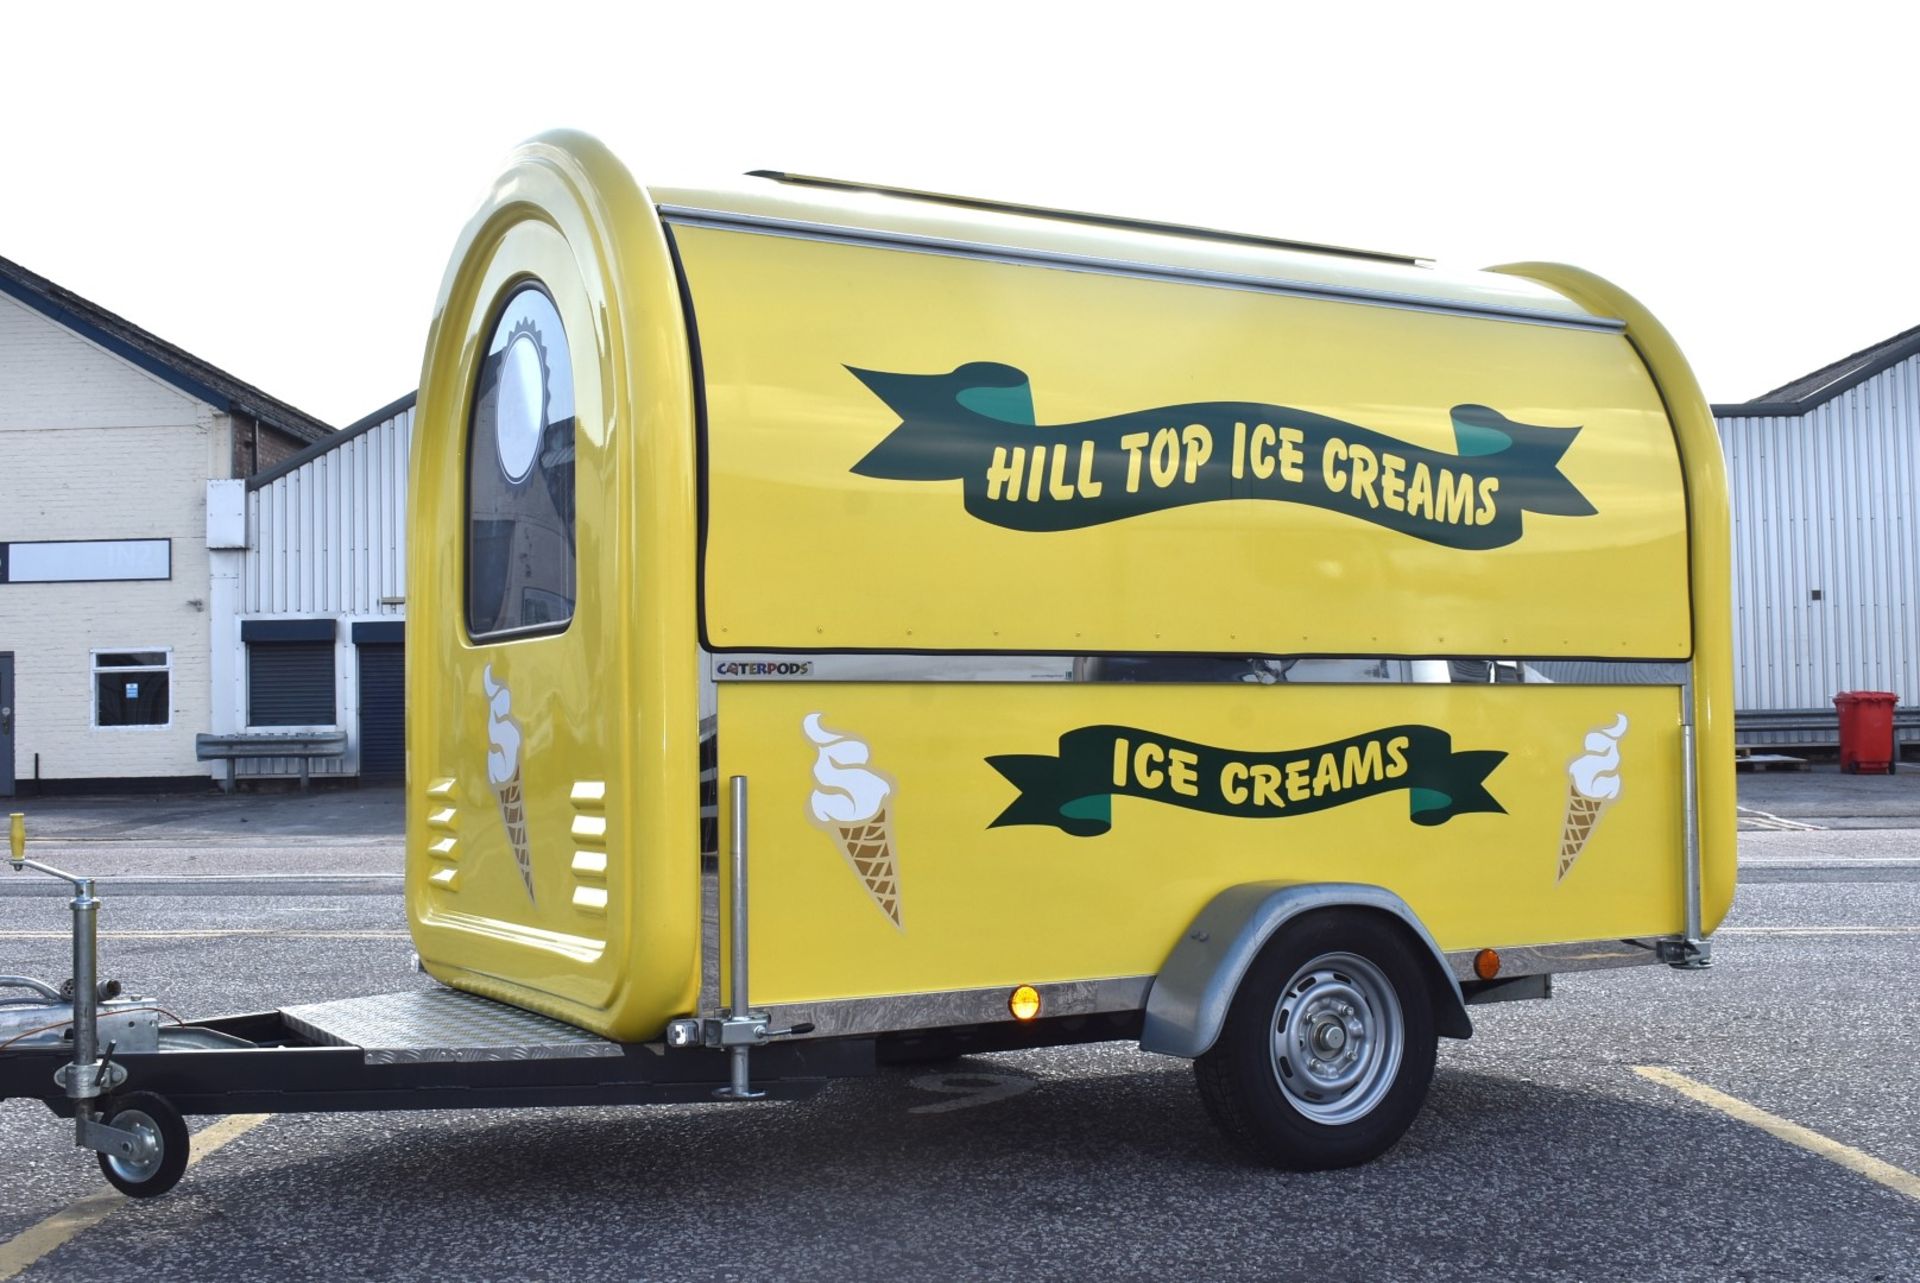 1 x Ice Cream Trailer Pod With Blue Ice T5 Ice Cream Machine, Chest Freezer, Cash Register & More! - Image 41 of 120